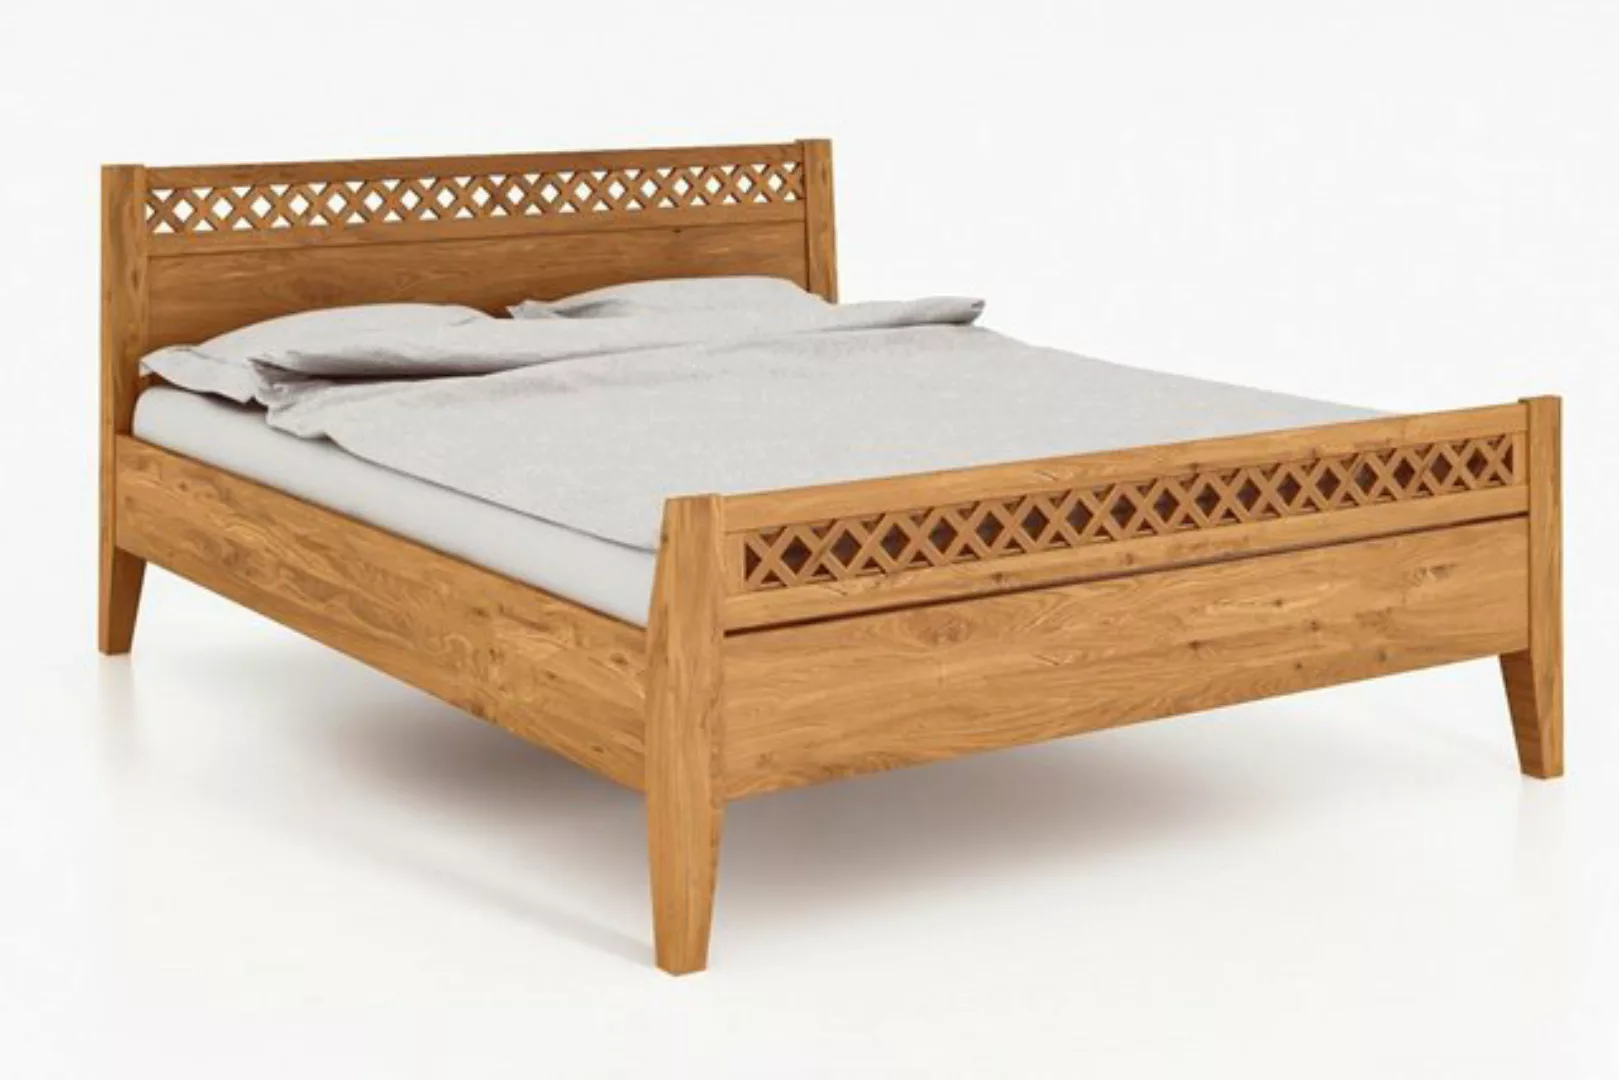 byoak Bett ODYS 120 x 190 aus Massivholz, mit Holzkopfteil, Naturgeölt günstig online kaufen